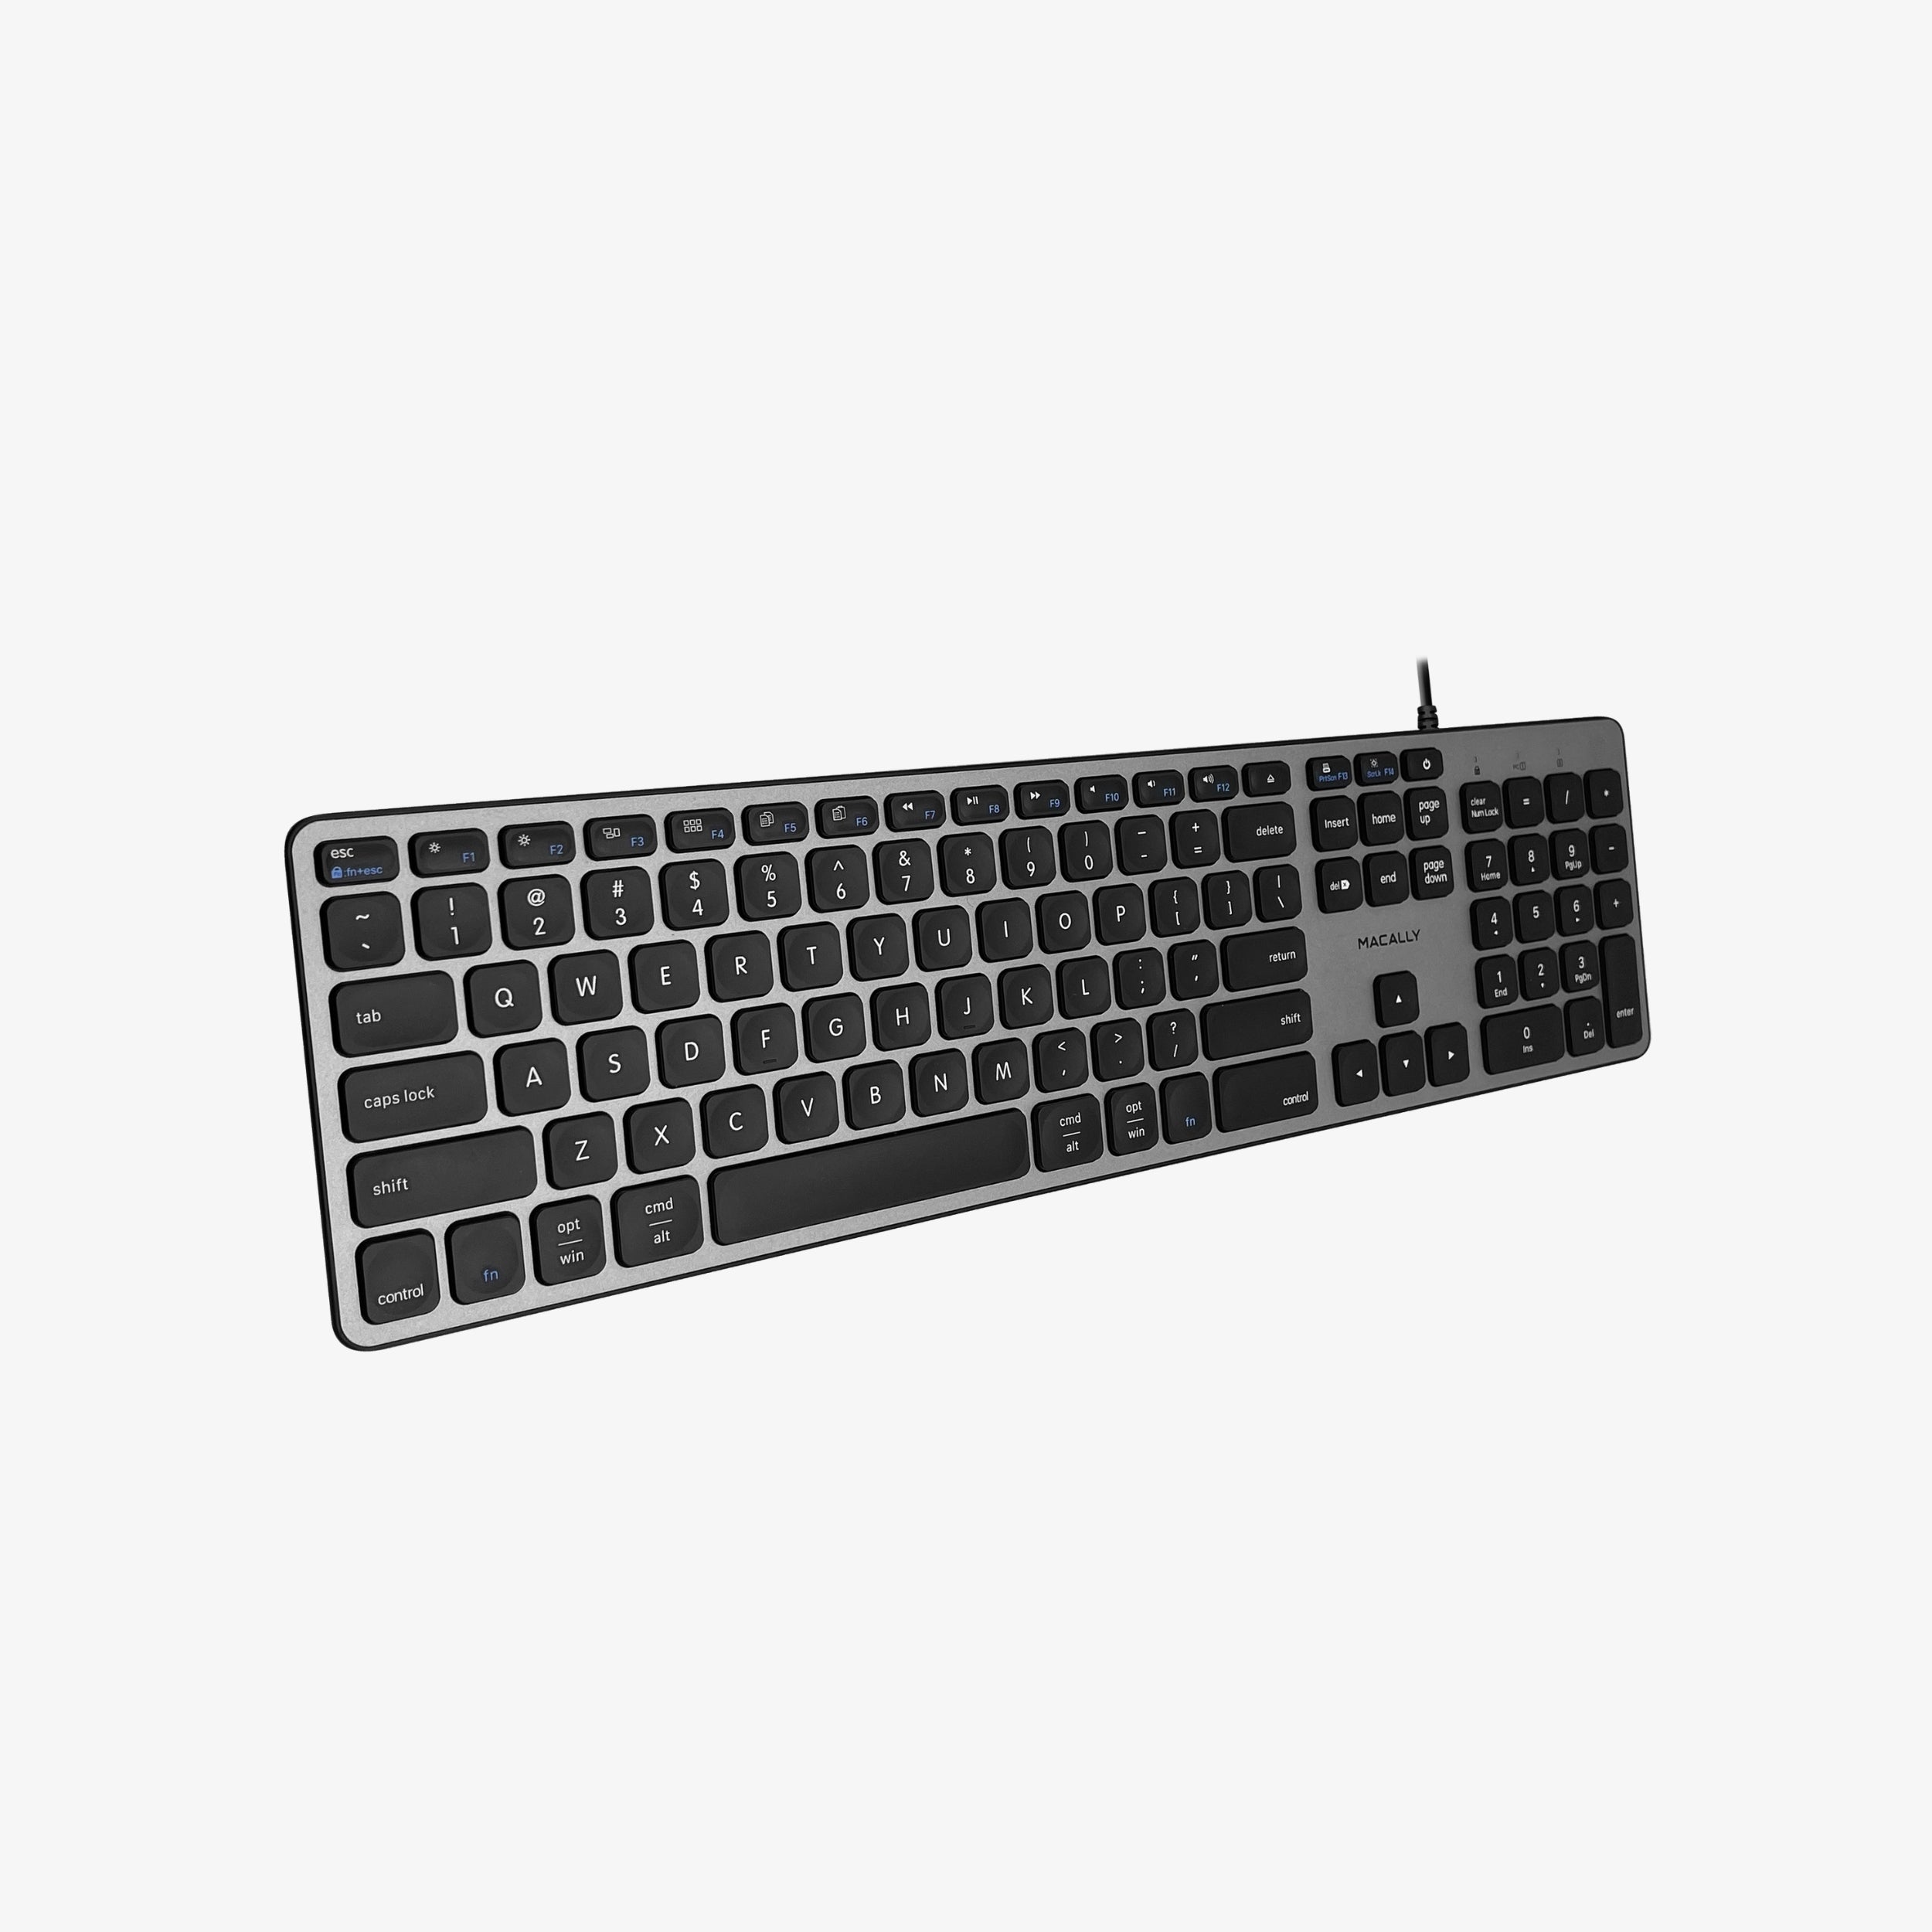 USB Keyboard | USB Hub for Mac / PC